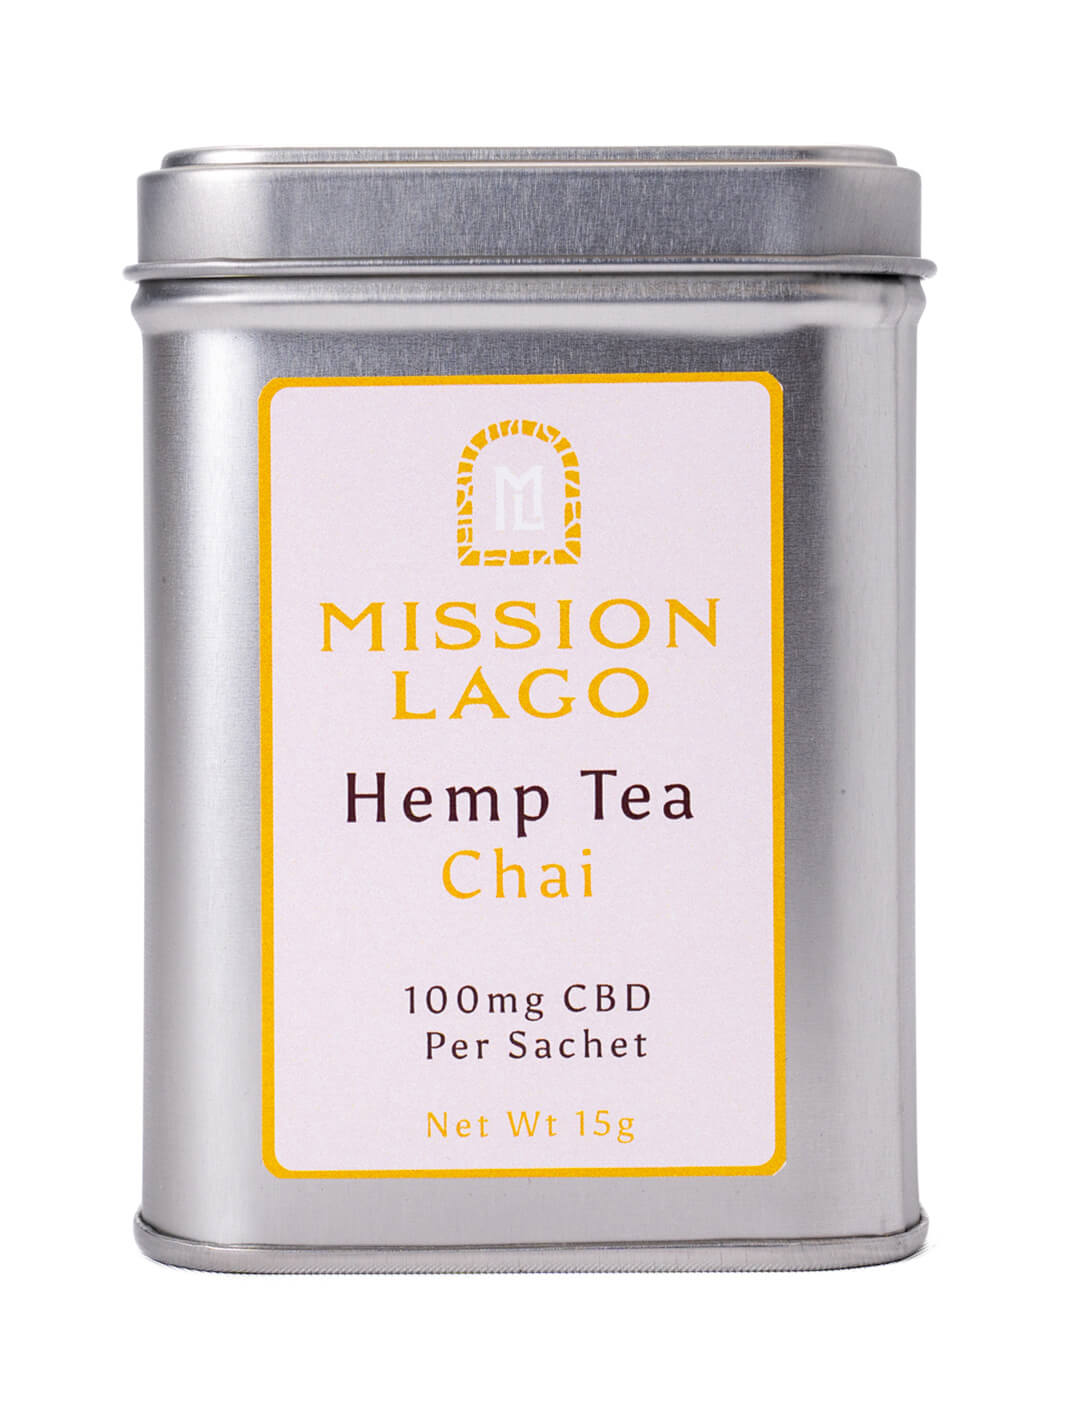 Chai Hemp Tea - Mission Lago Farms